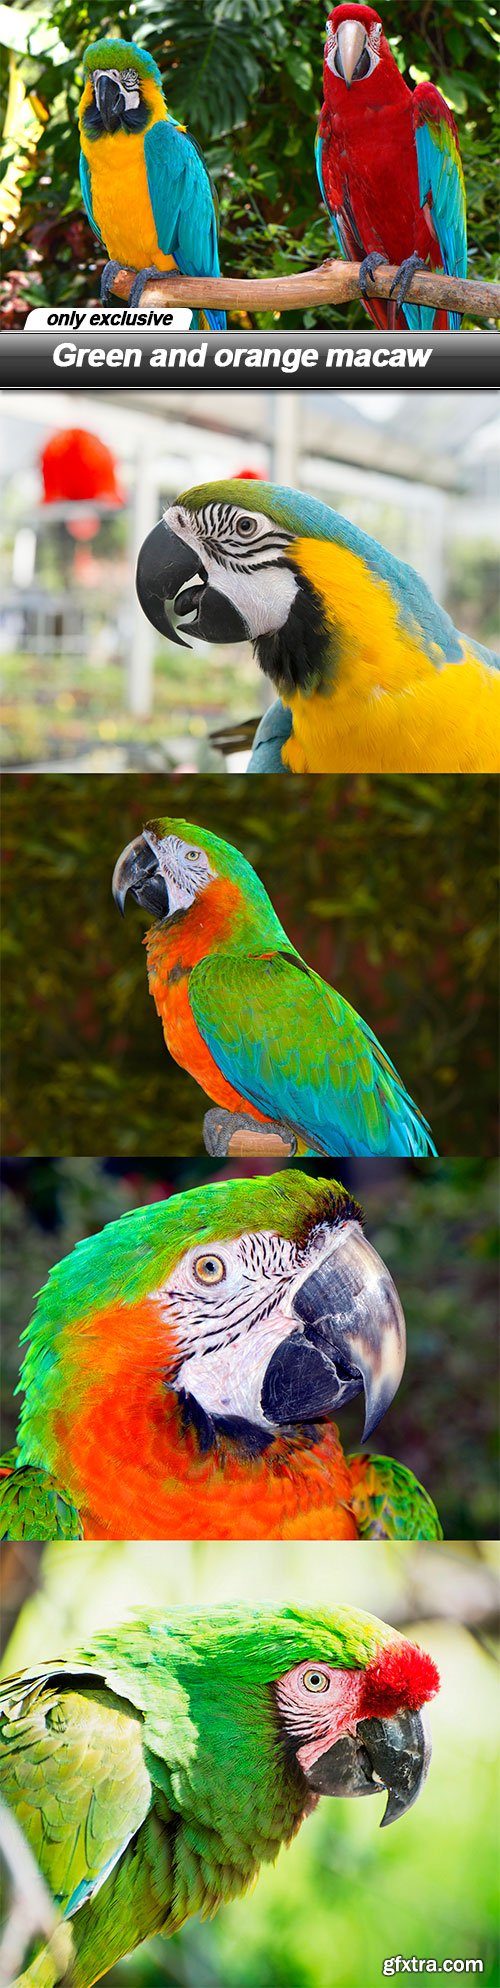 Green and orange macaw - 7 UHQ JPEG